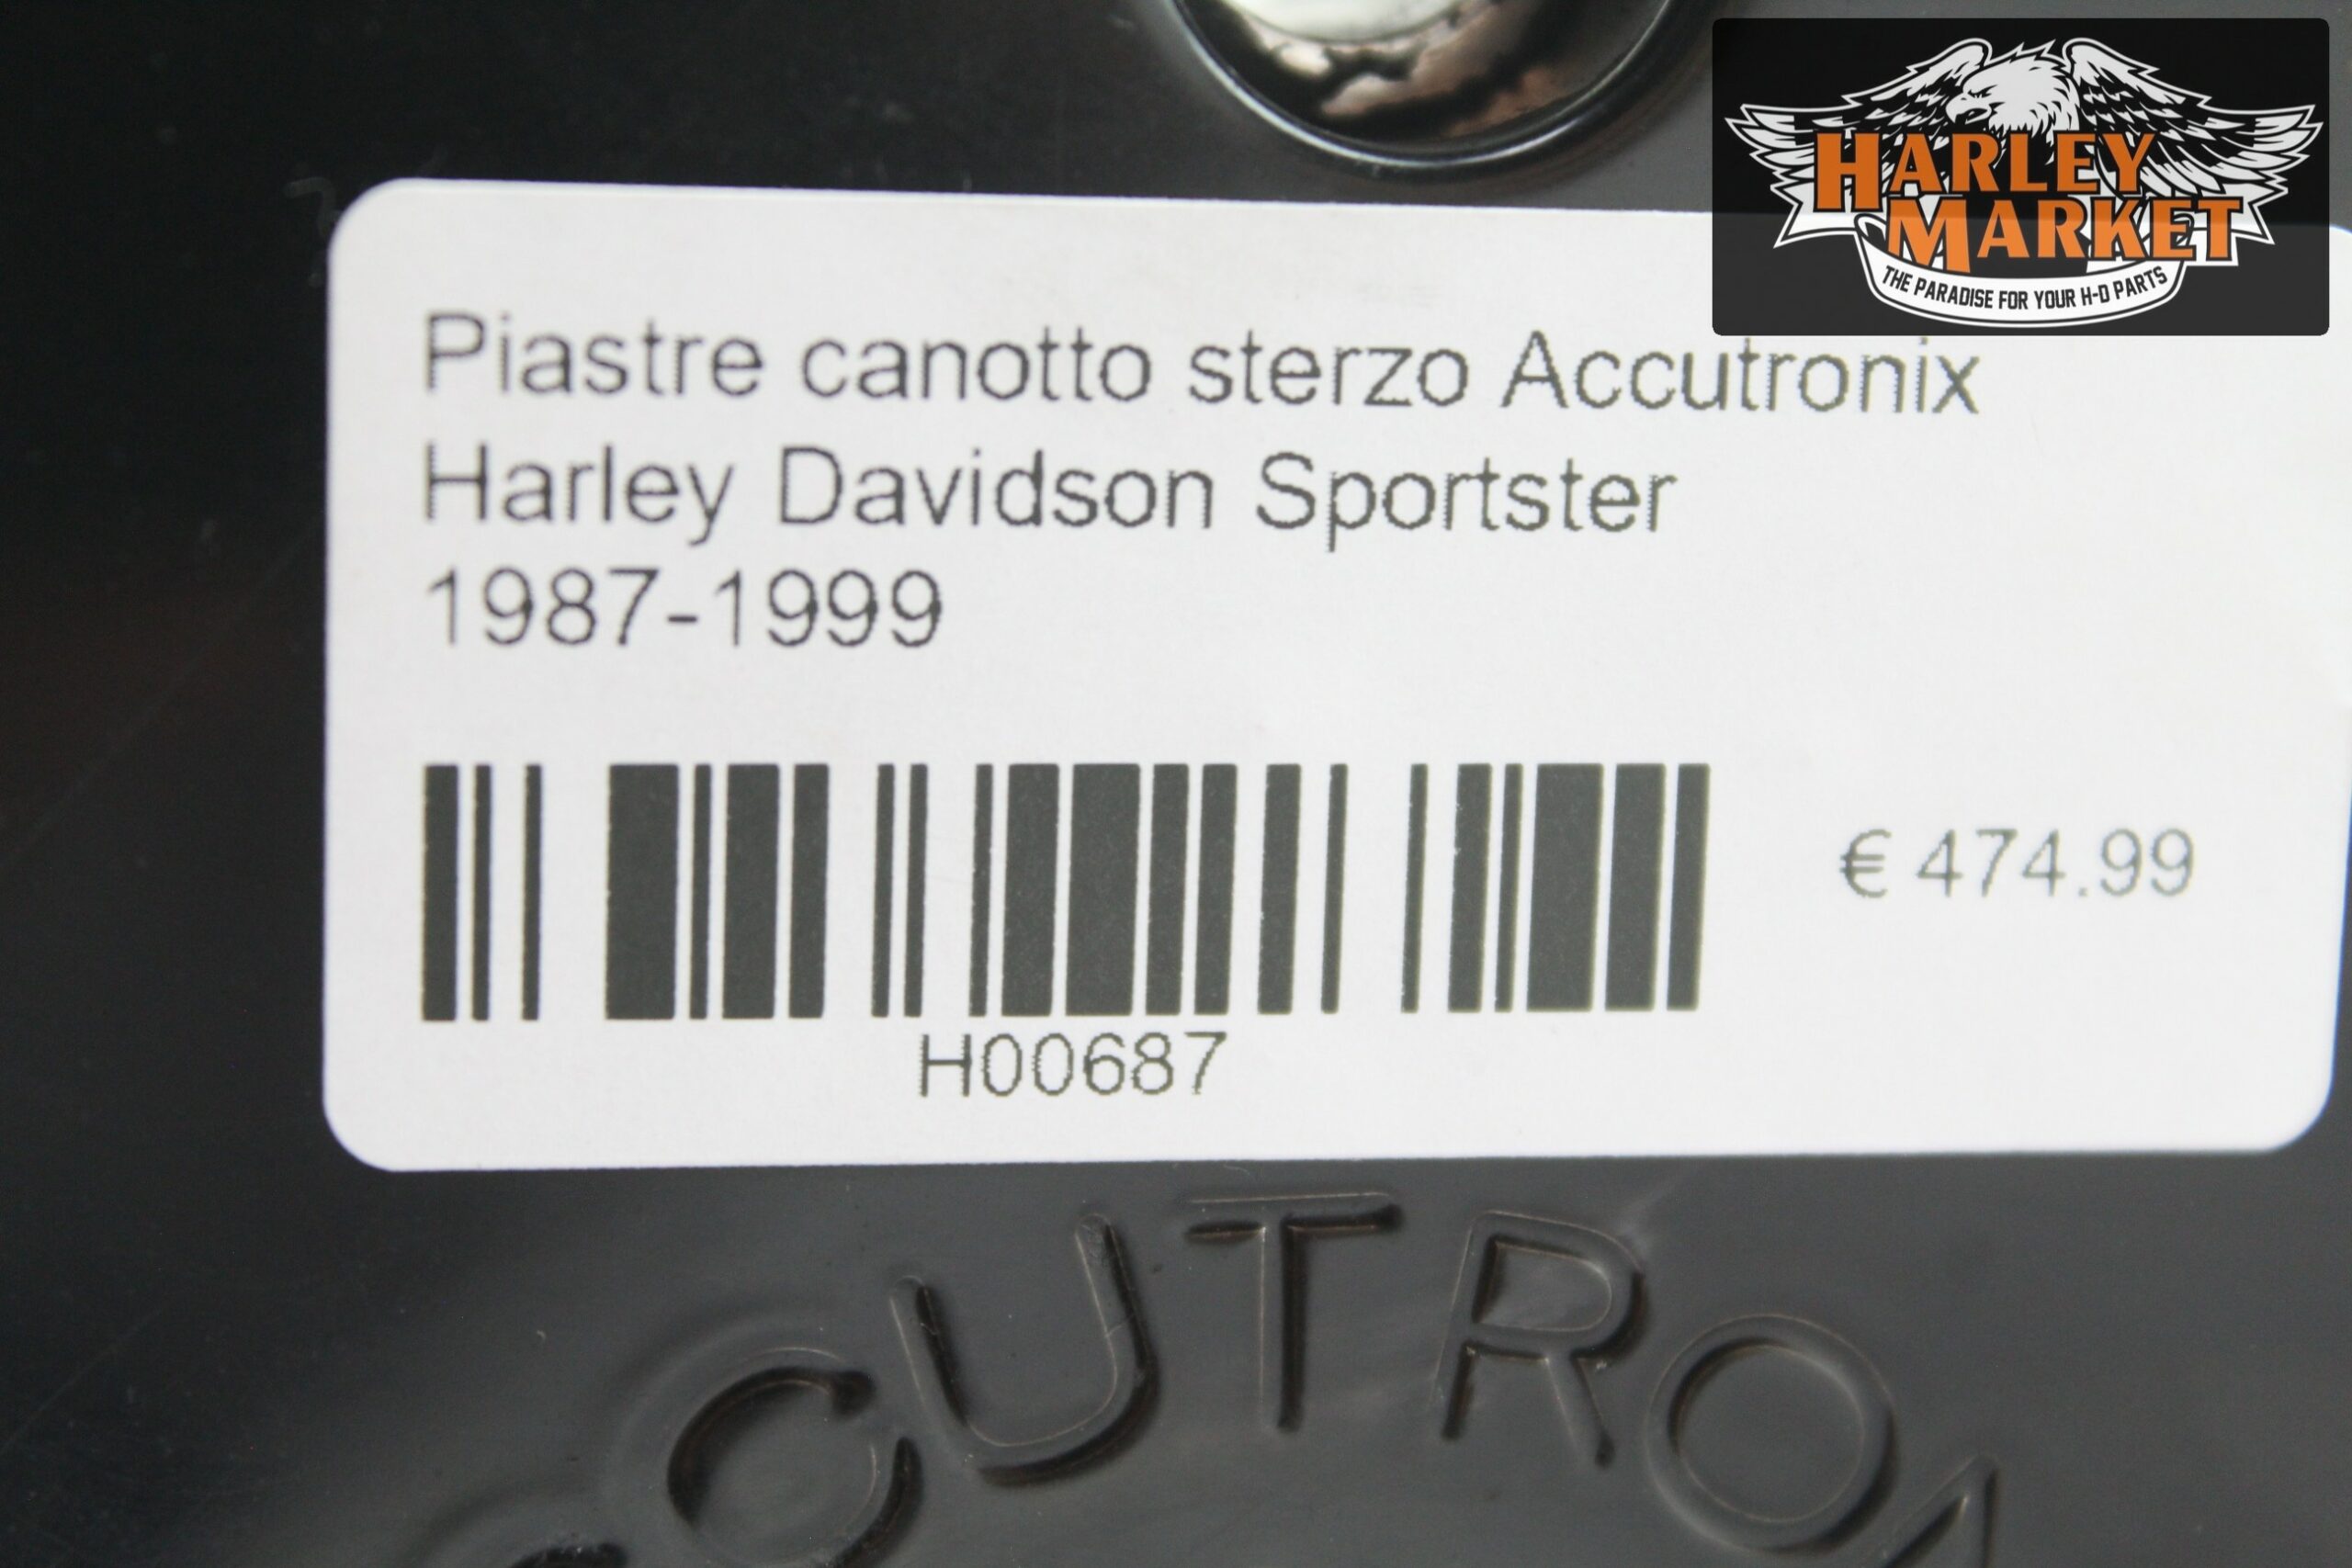 Piastre canotto sterzo Accutronix Harley Davidson Sportster 1987-1999